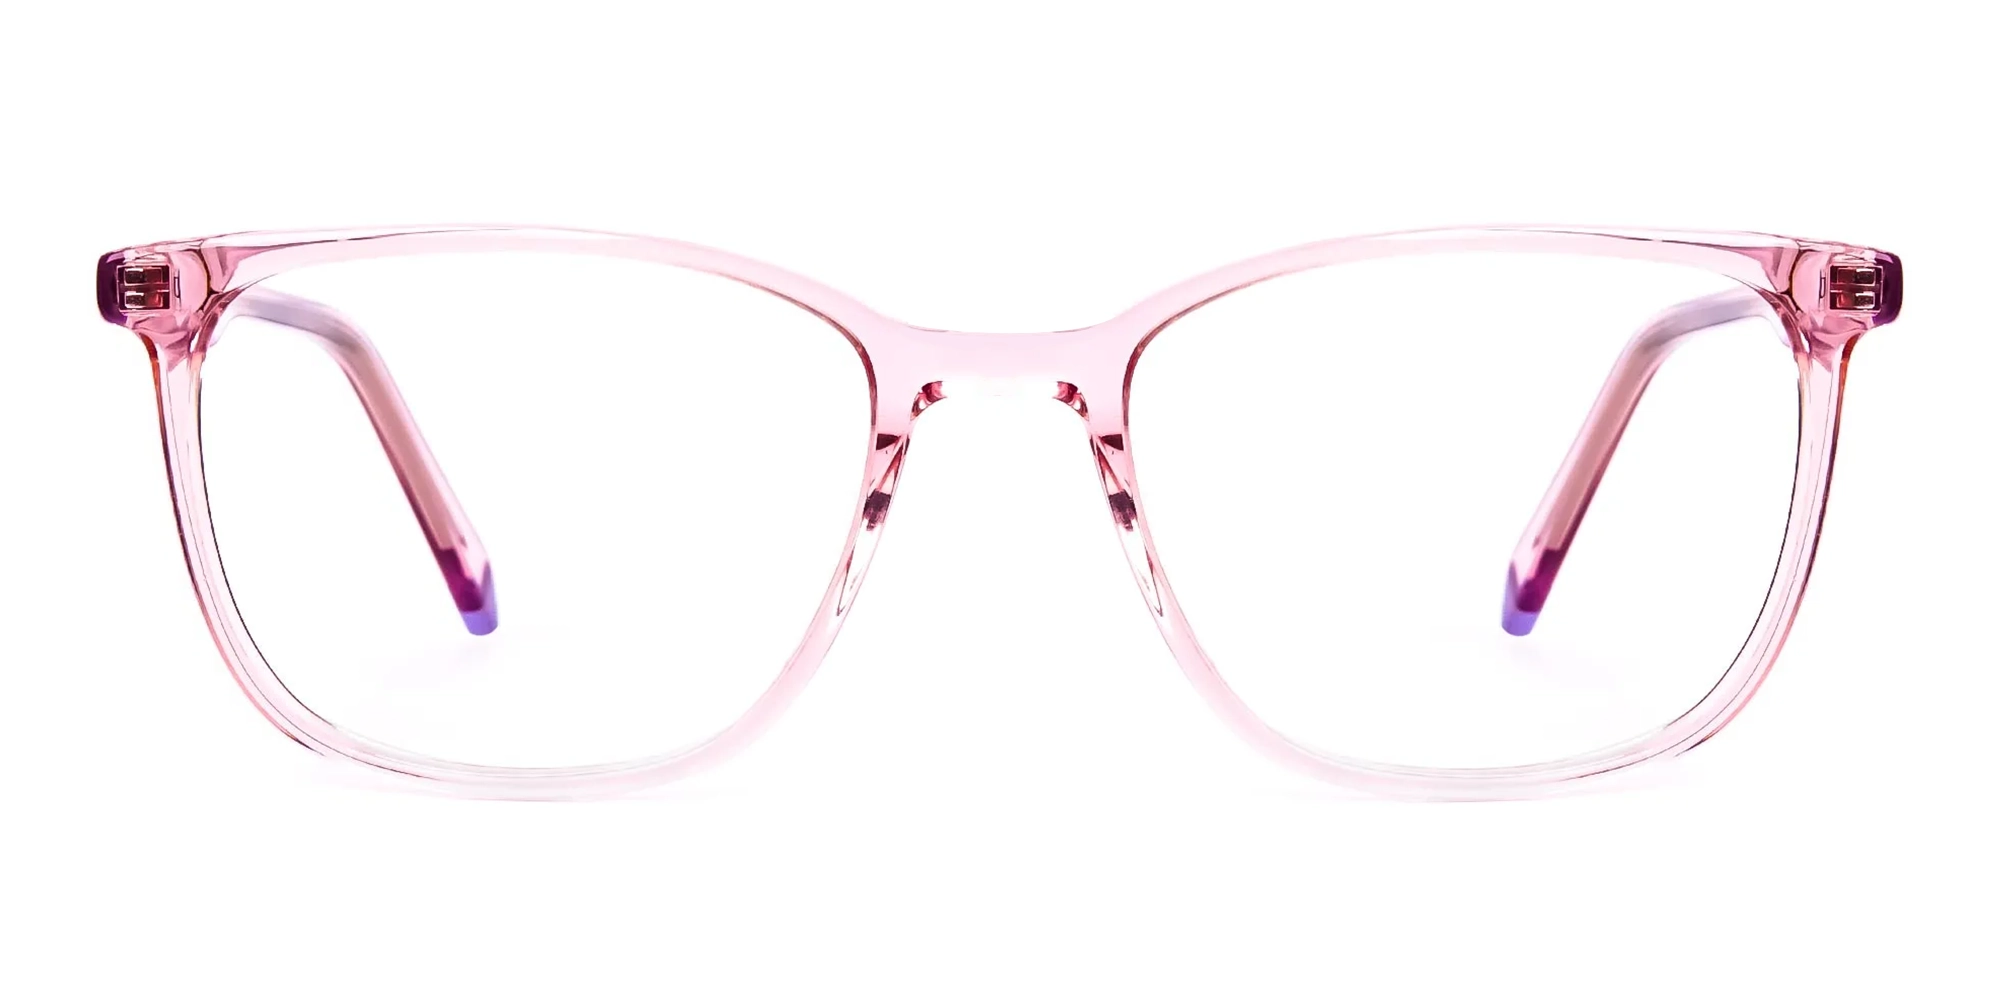 Crystal pink Square and Rectangular Glasses Frames -2